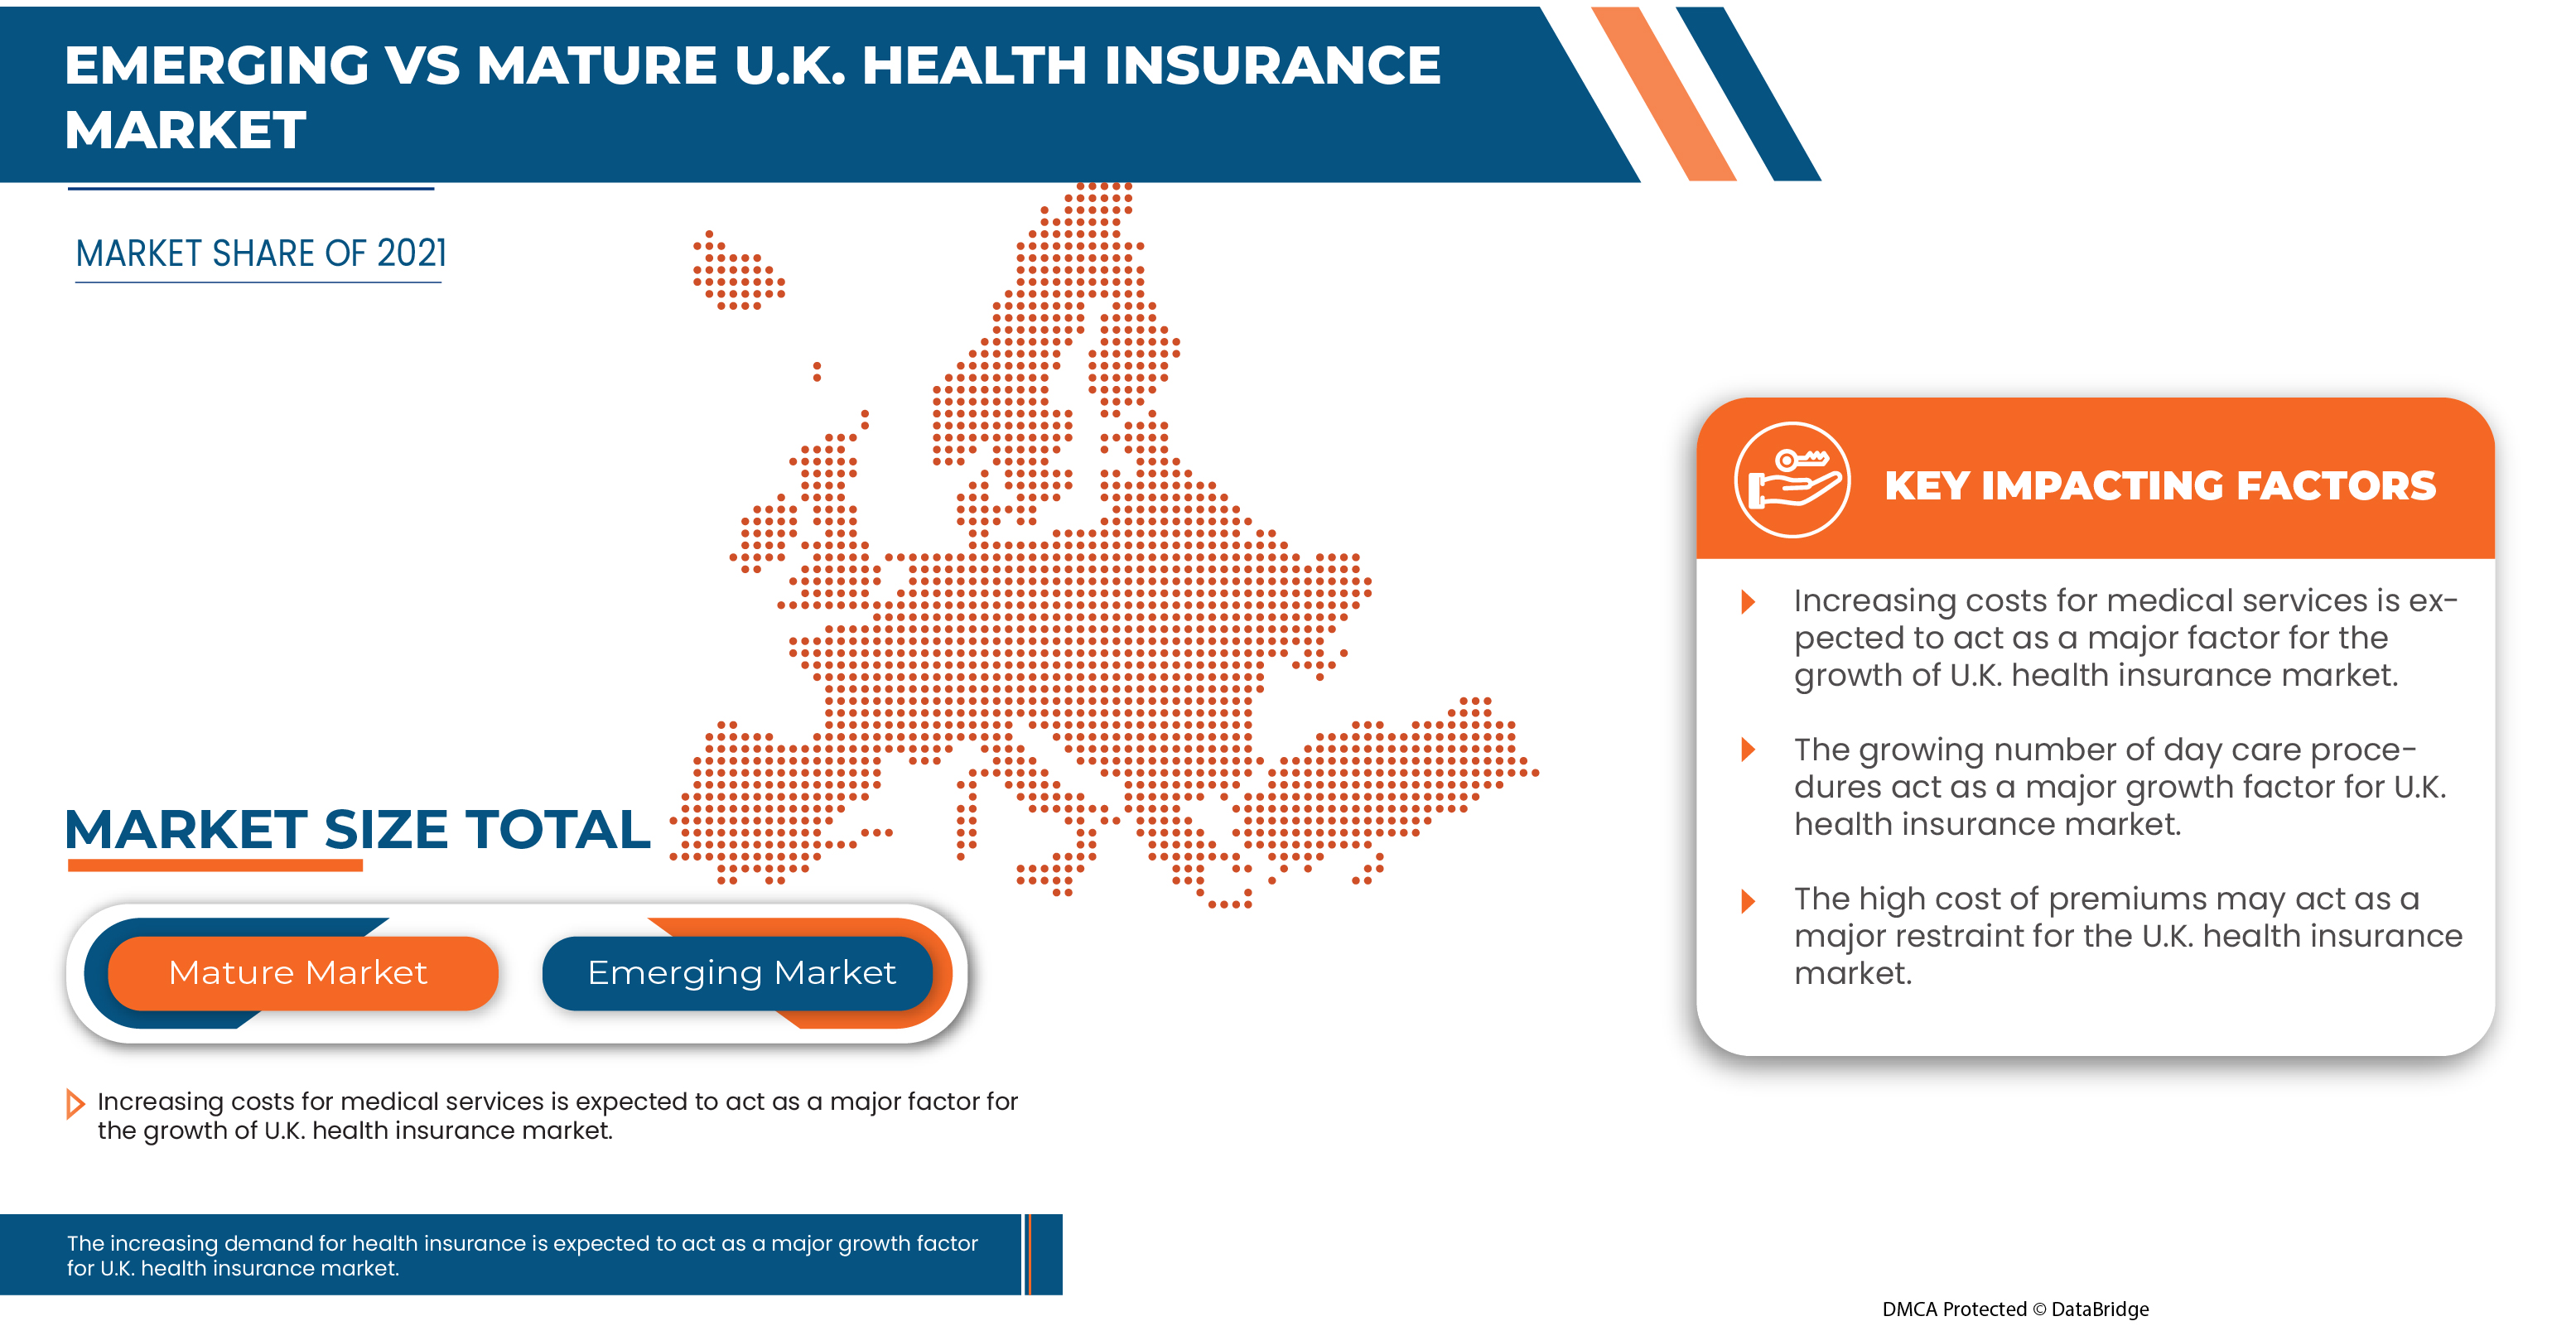 U.K. Health Insurance Market